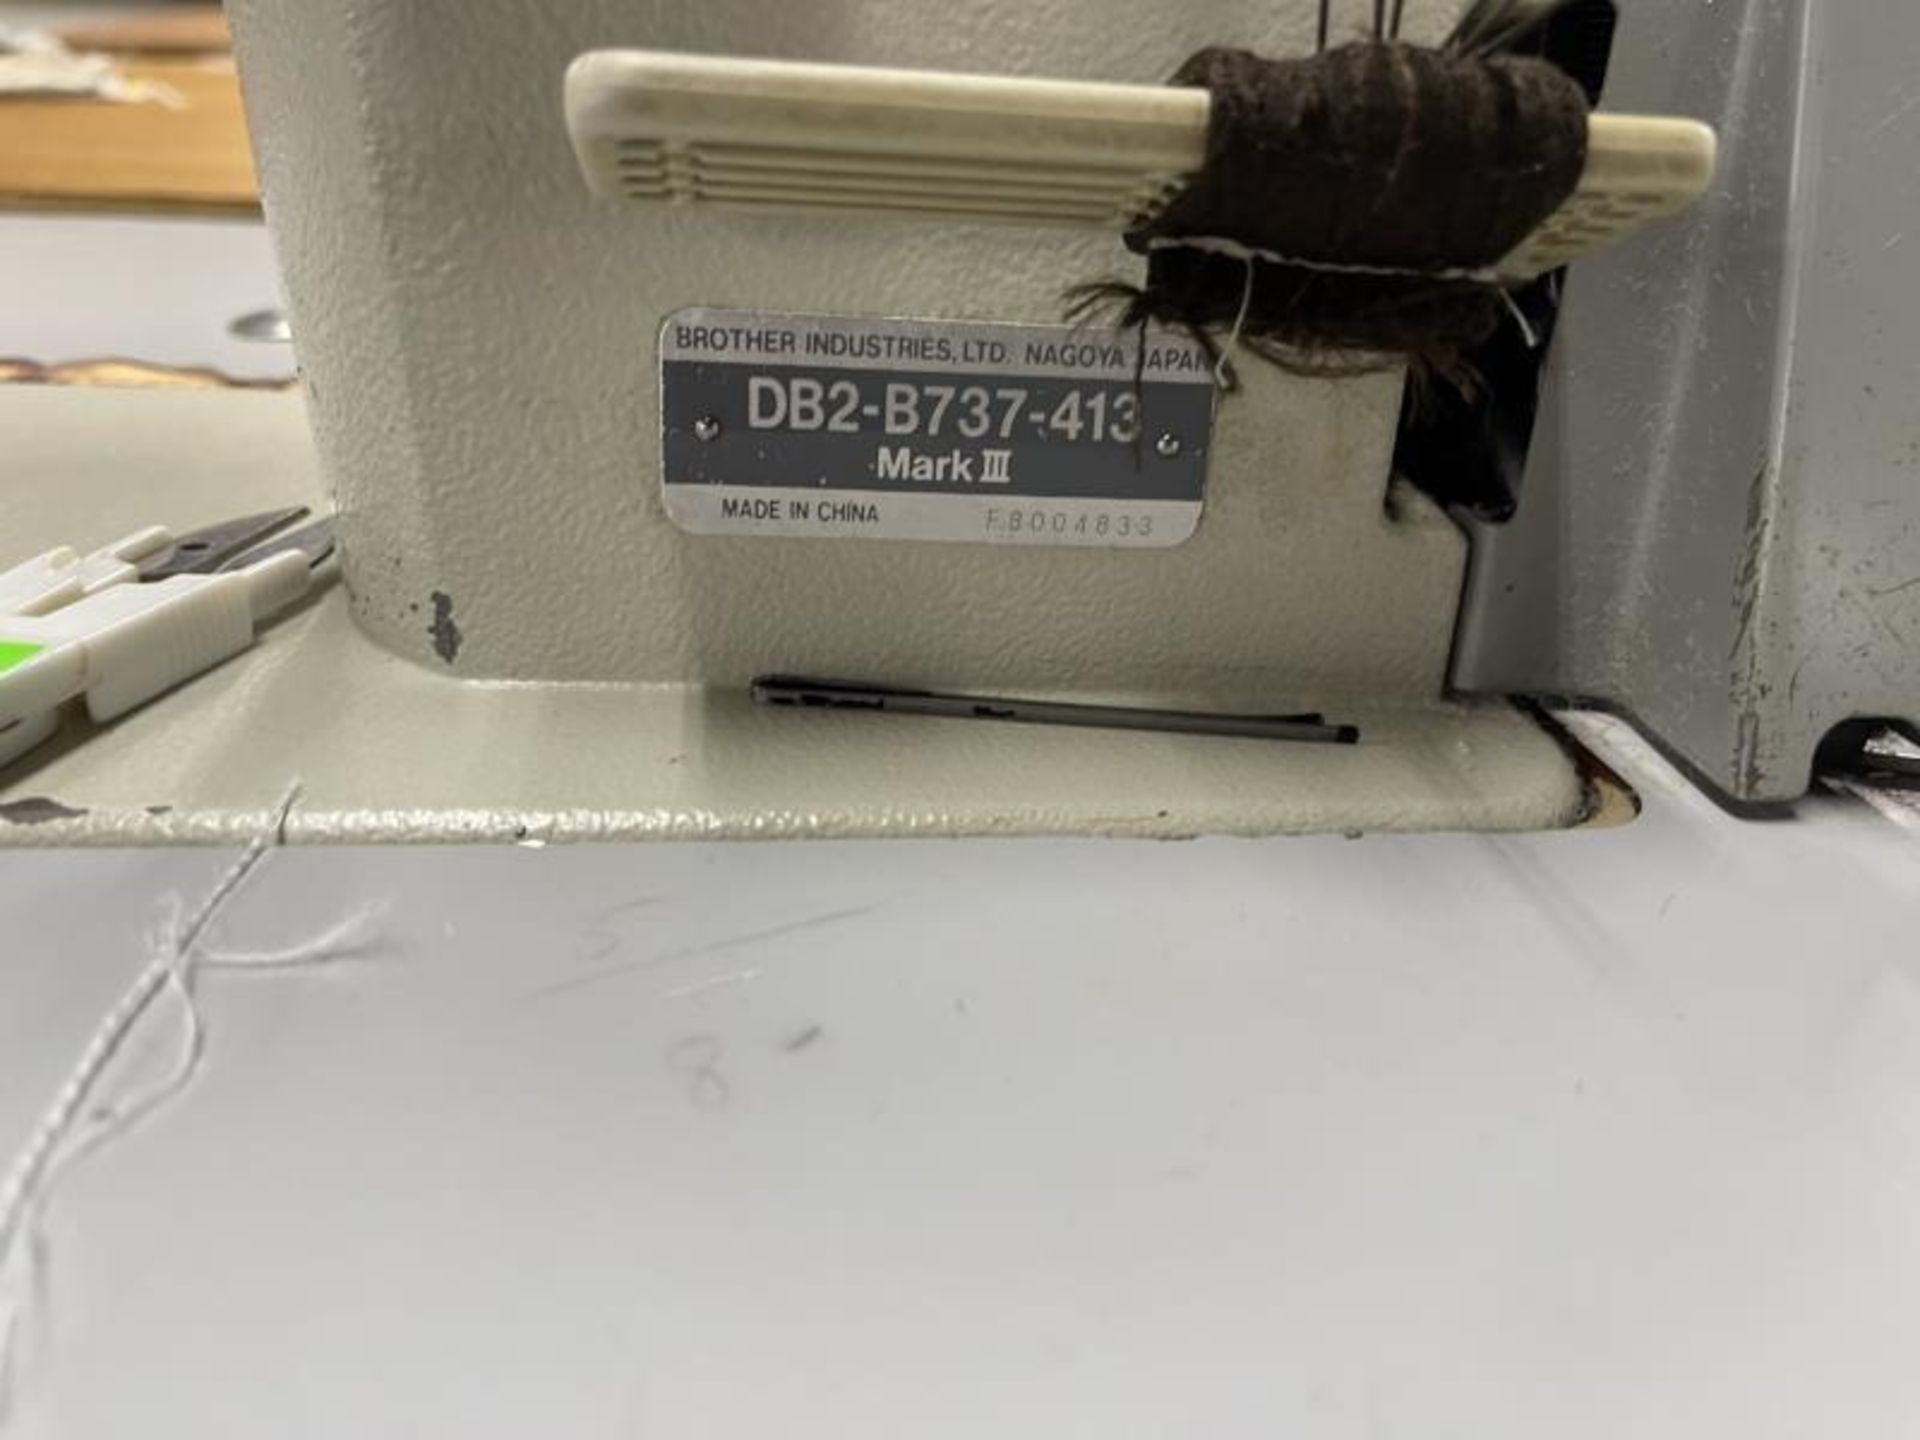 Brother Sewing Machine Mark III M: DB2-B737-413 SN: F8004833 - Image 4 of 7